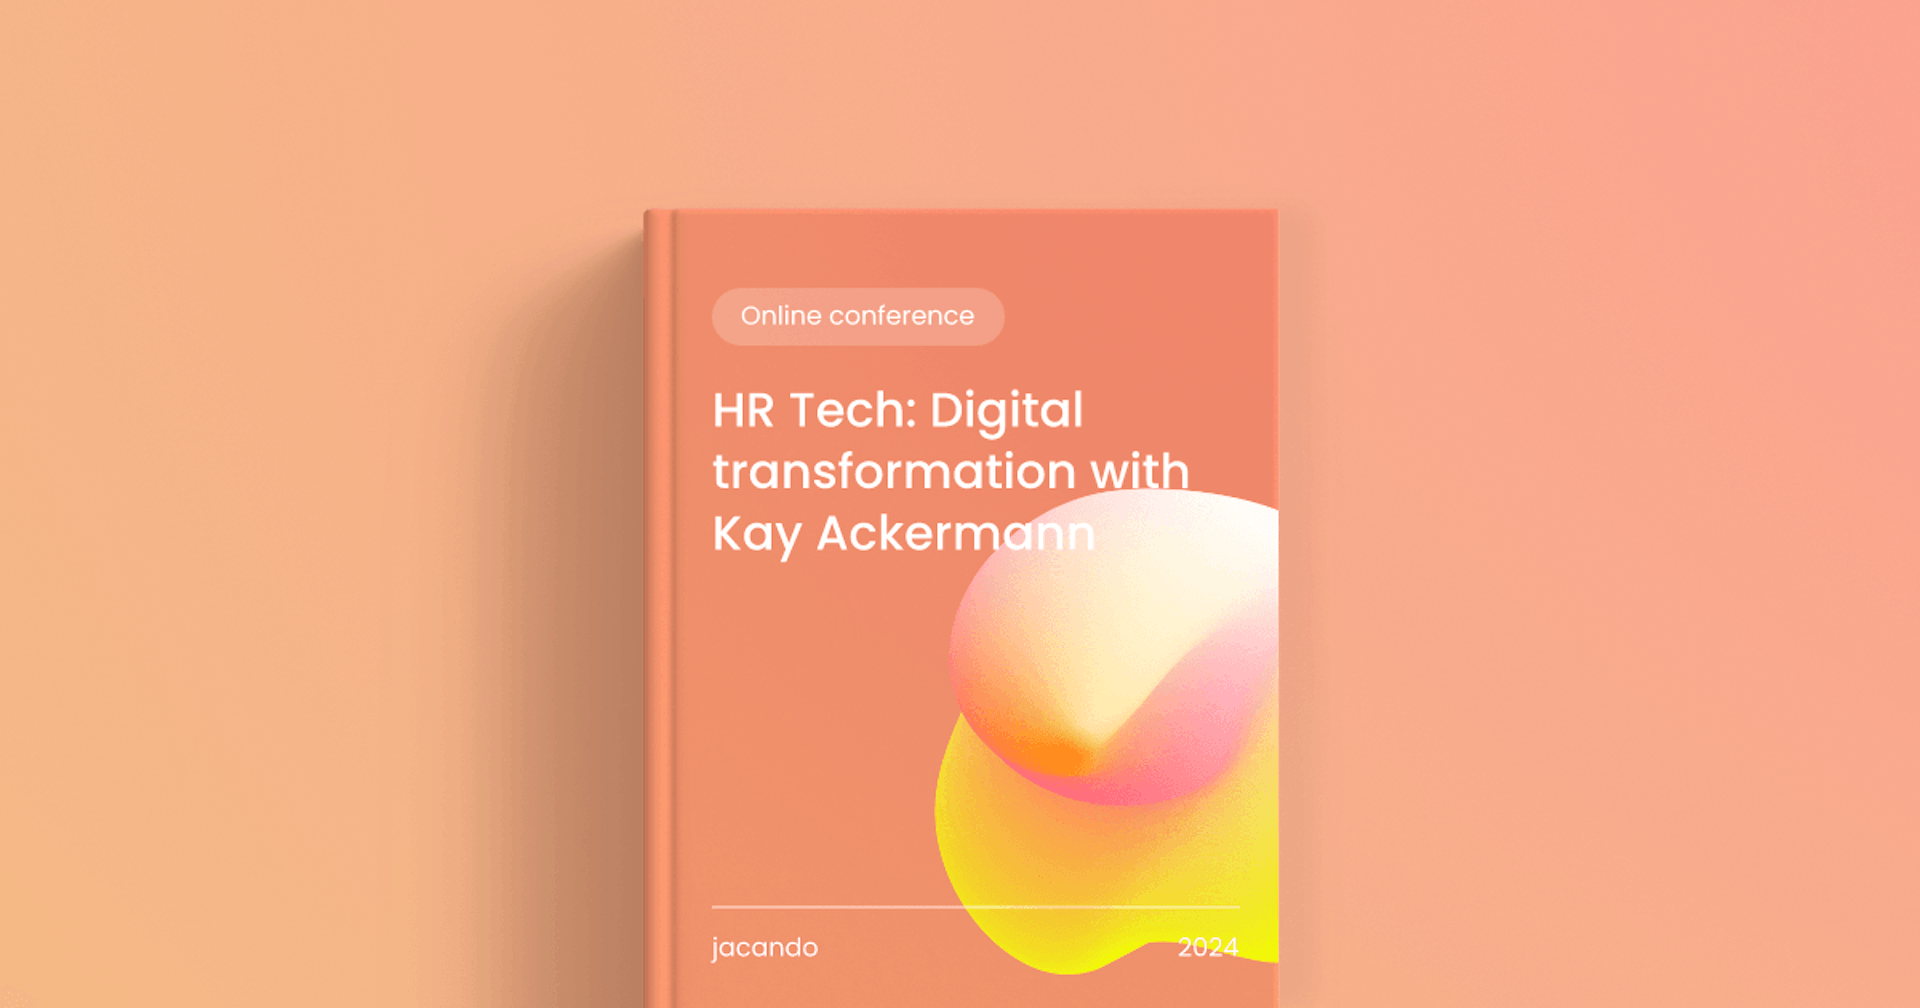 HR Tech: Digital transformation with Kay Ackermann